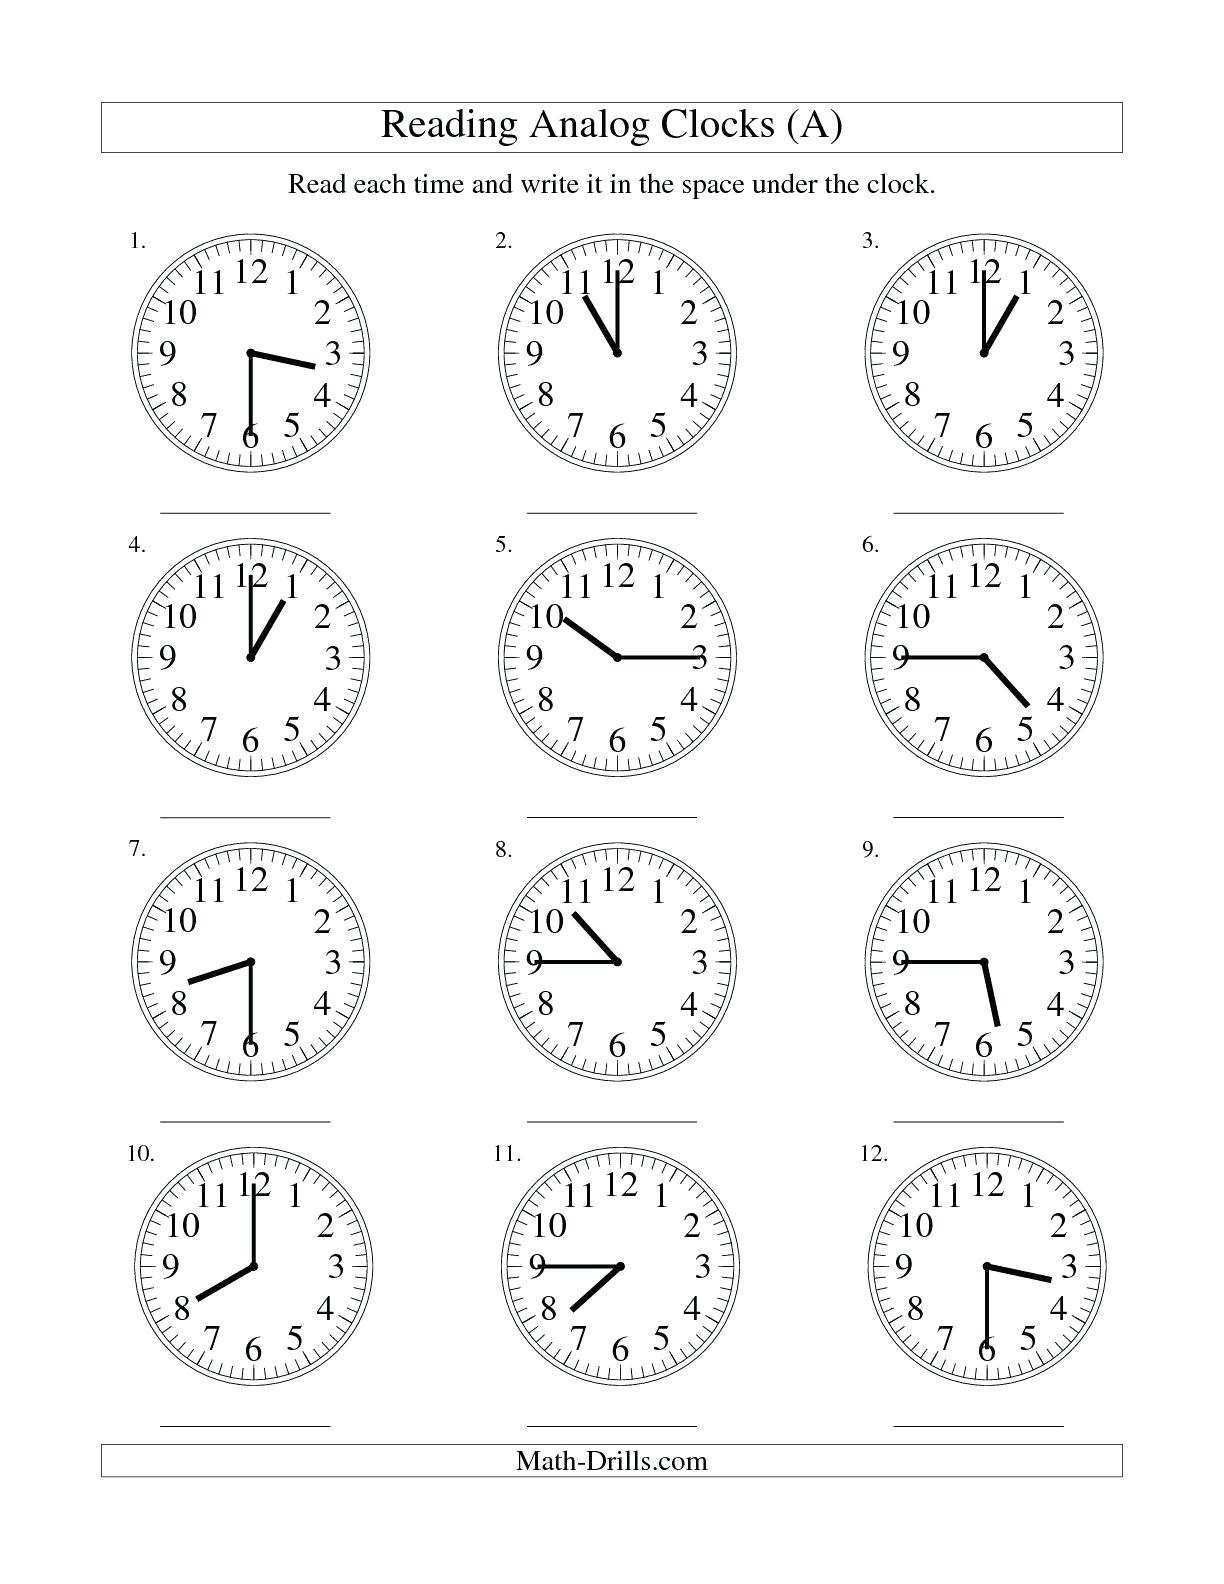 digital clock in excel file download